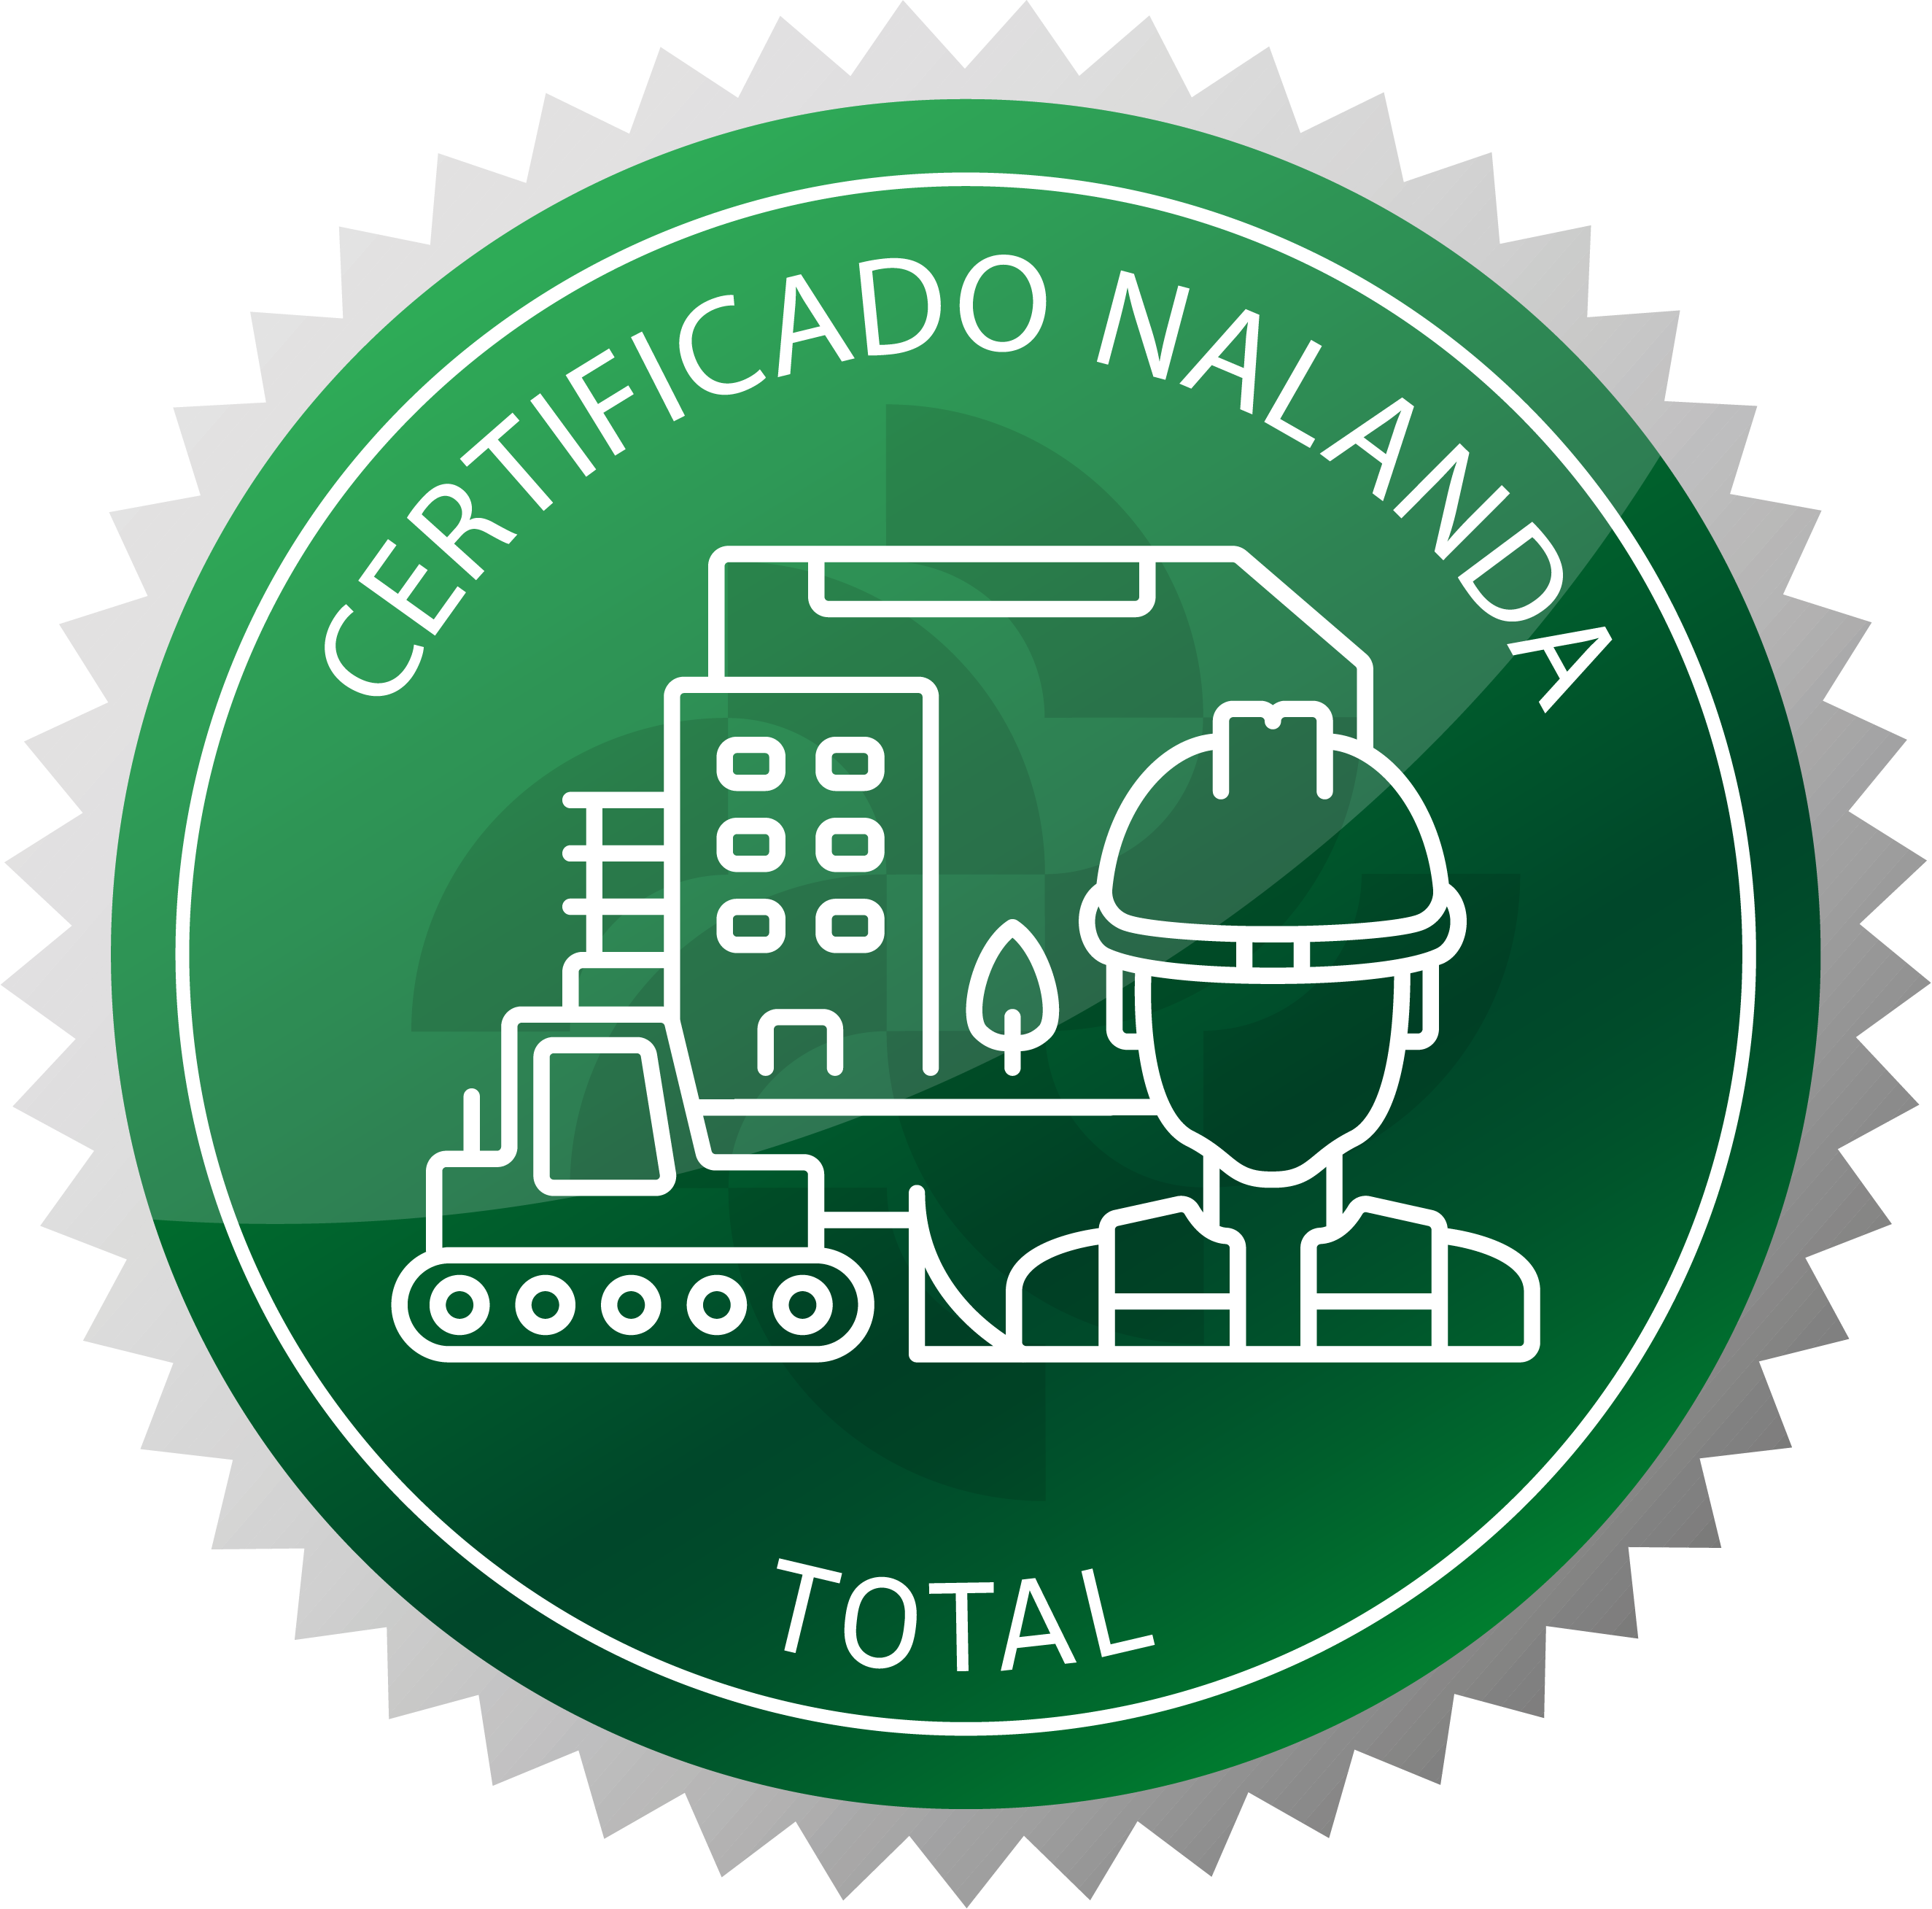 certificado nalanda